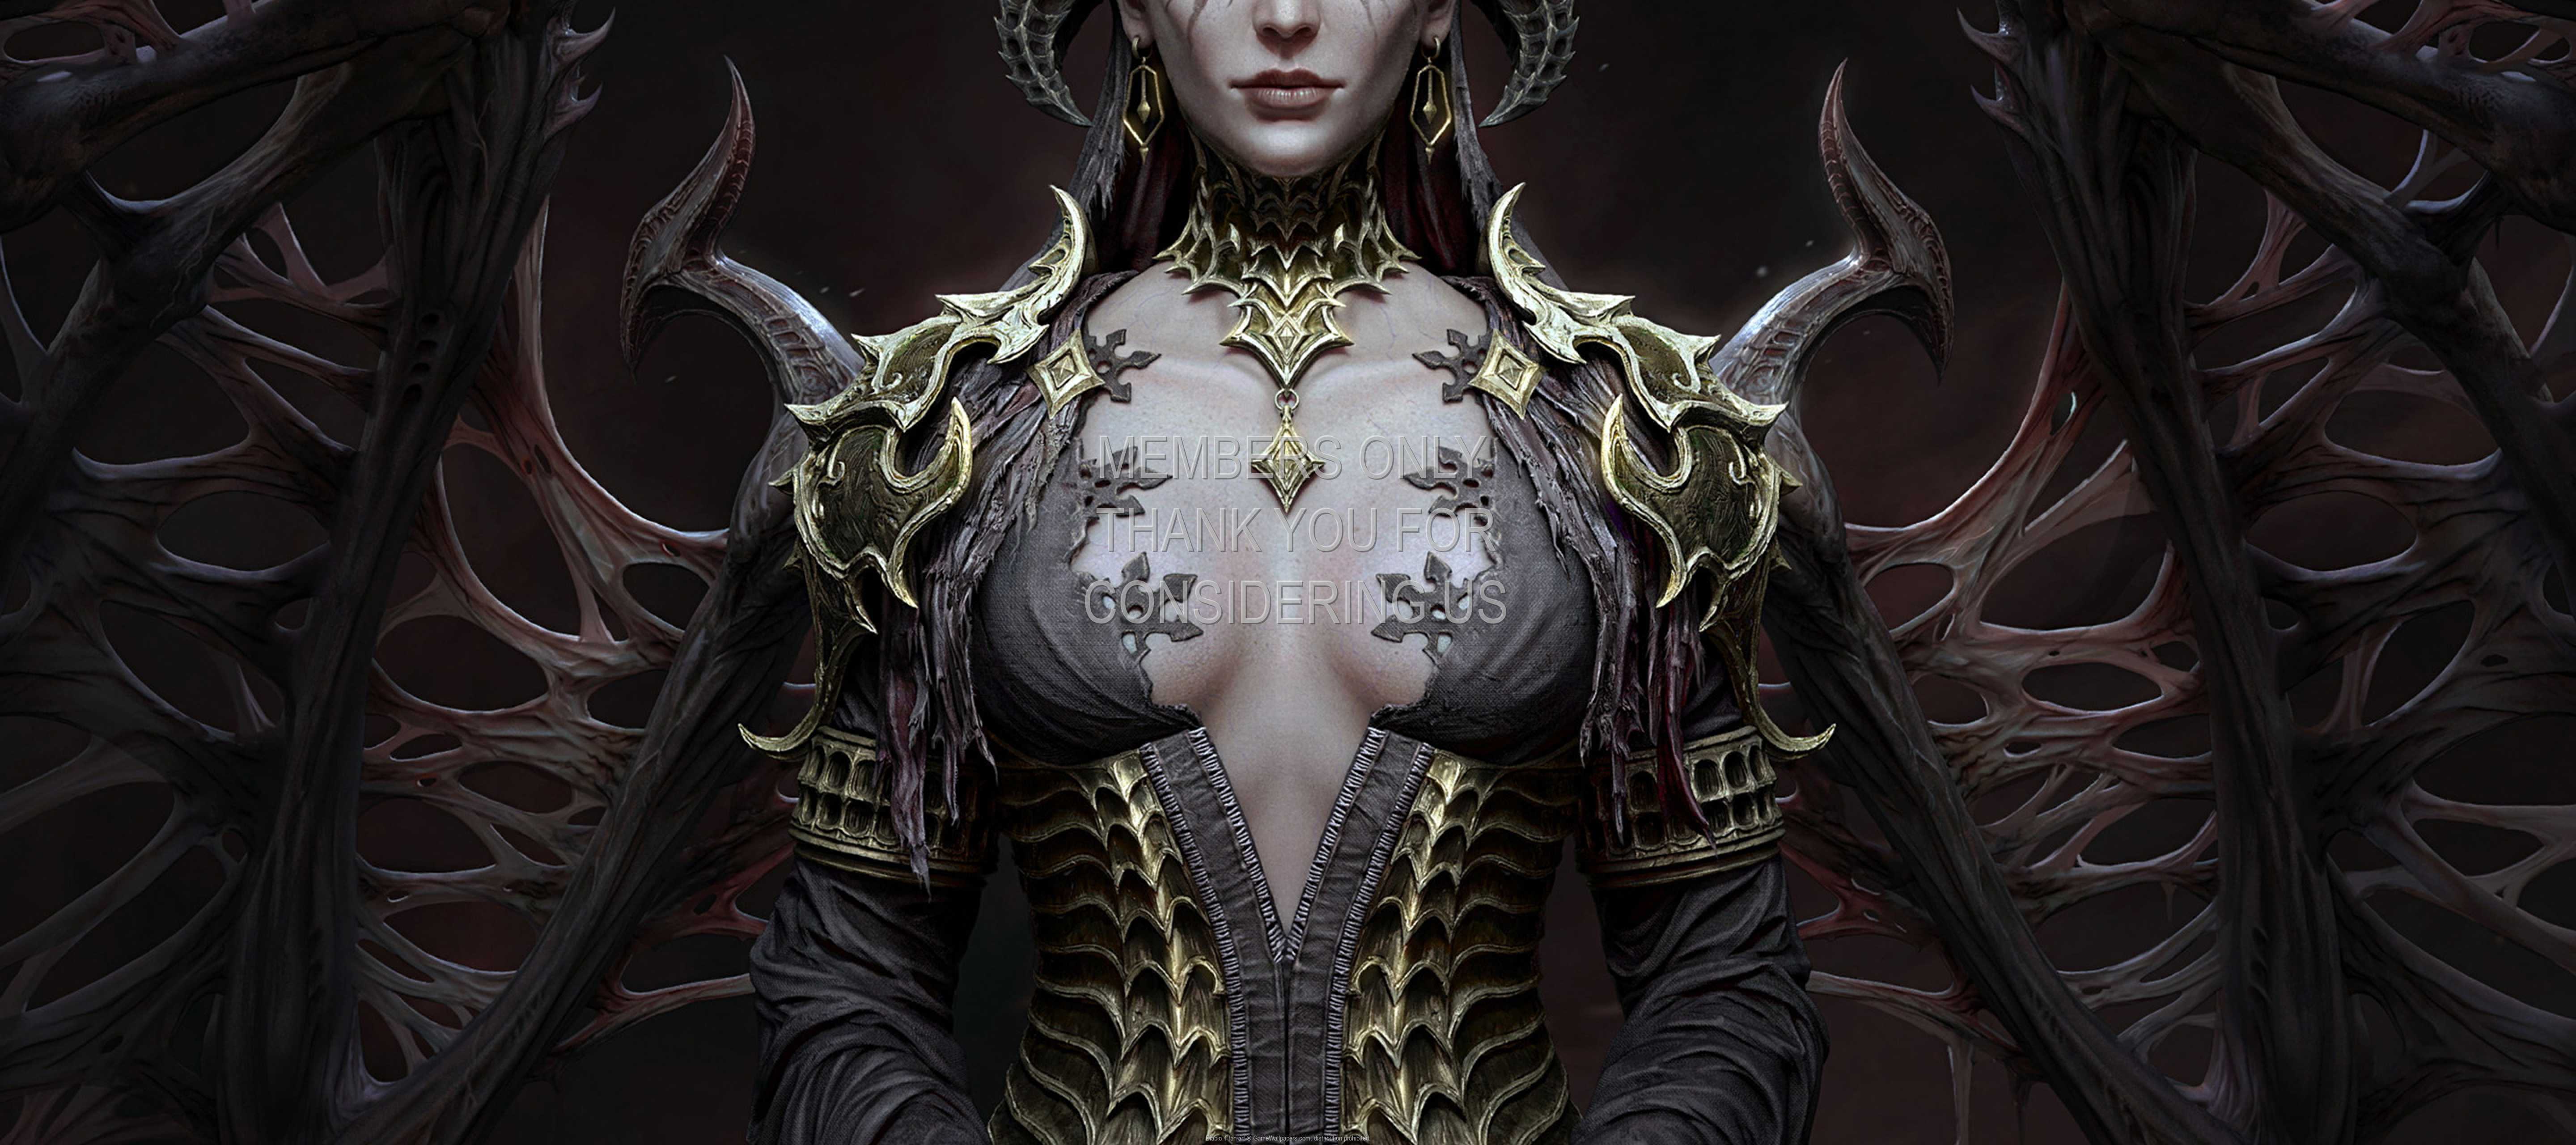 Diablo 4 fan art 1440p%20Horizontal Mobile wallpaper or background 06